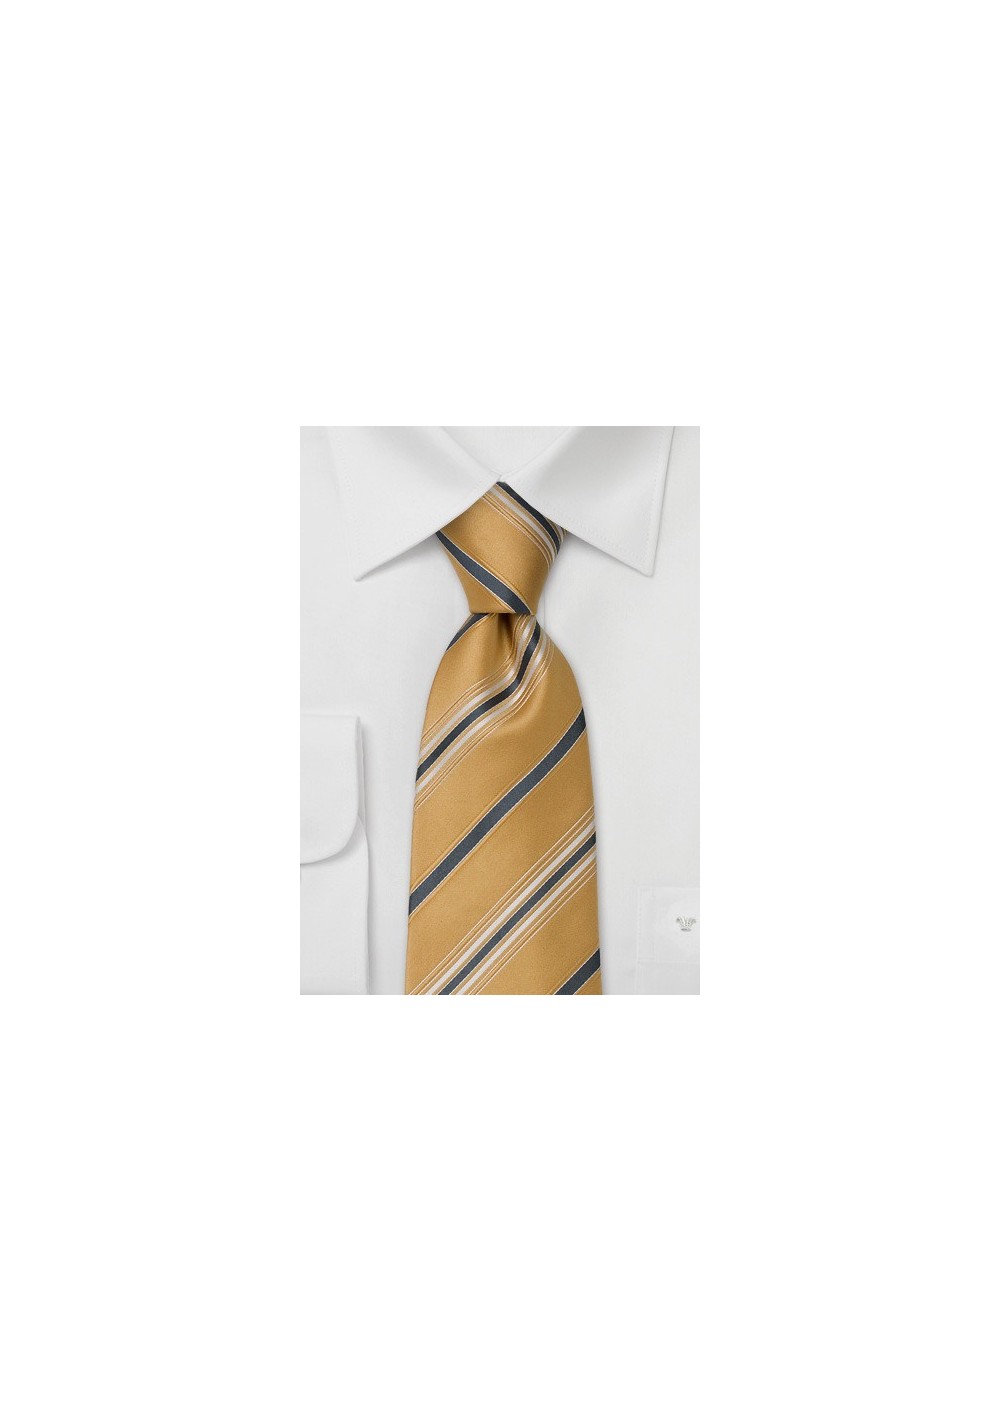 Sandtone Yellow Silk Ties - Italian Striped Tie by Cavallieri